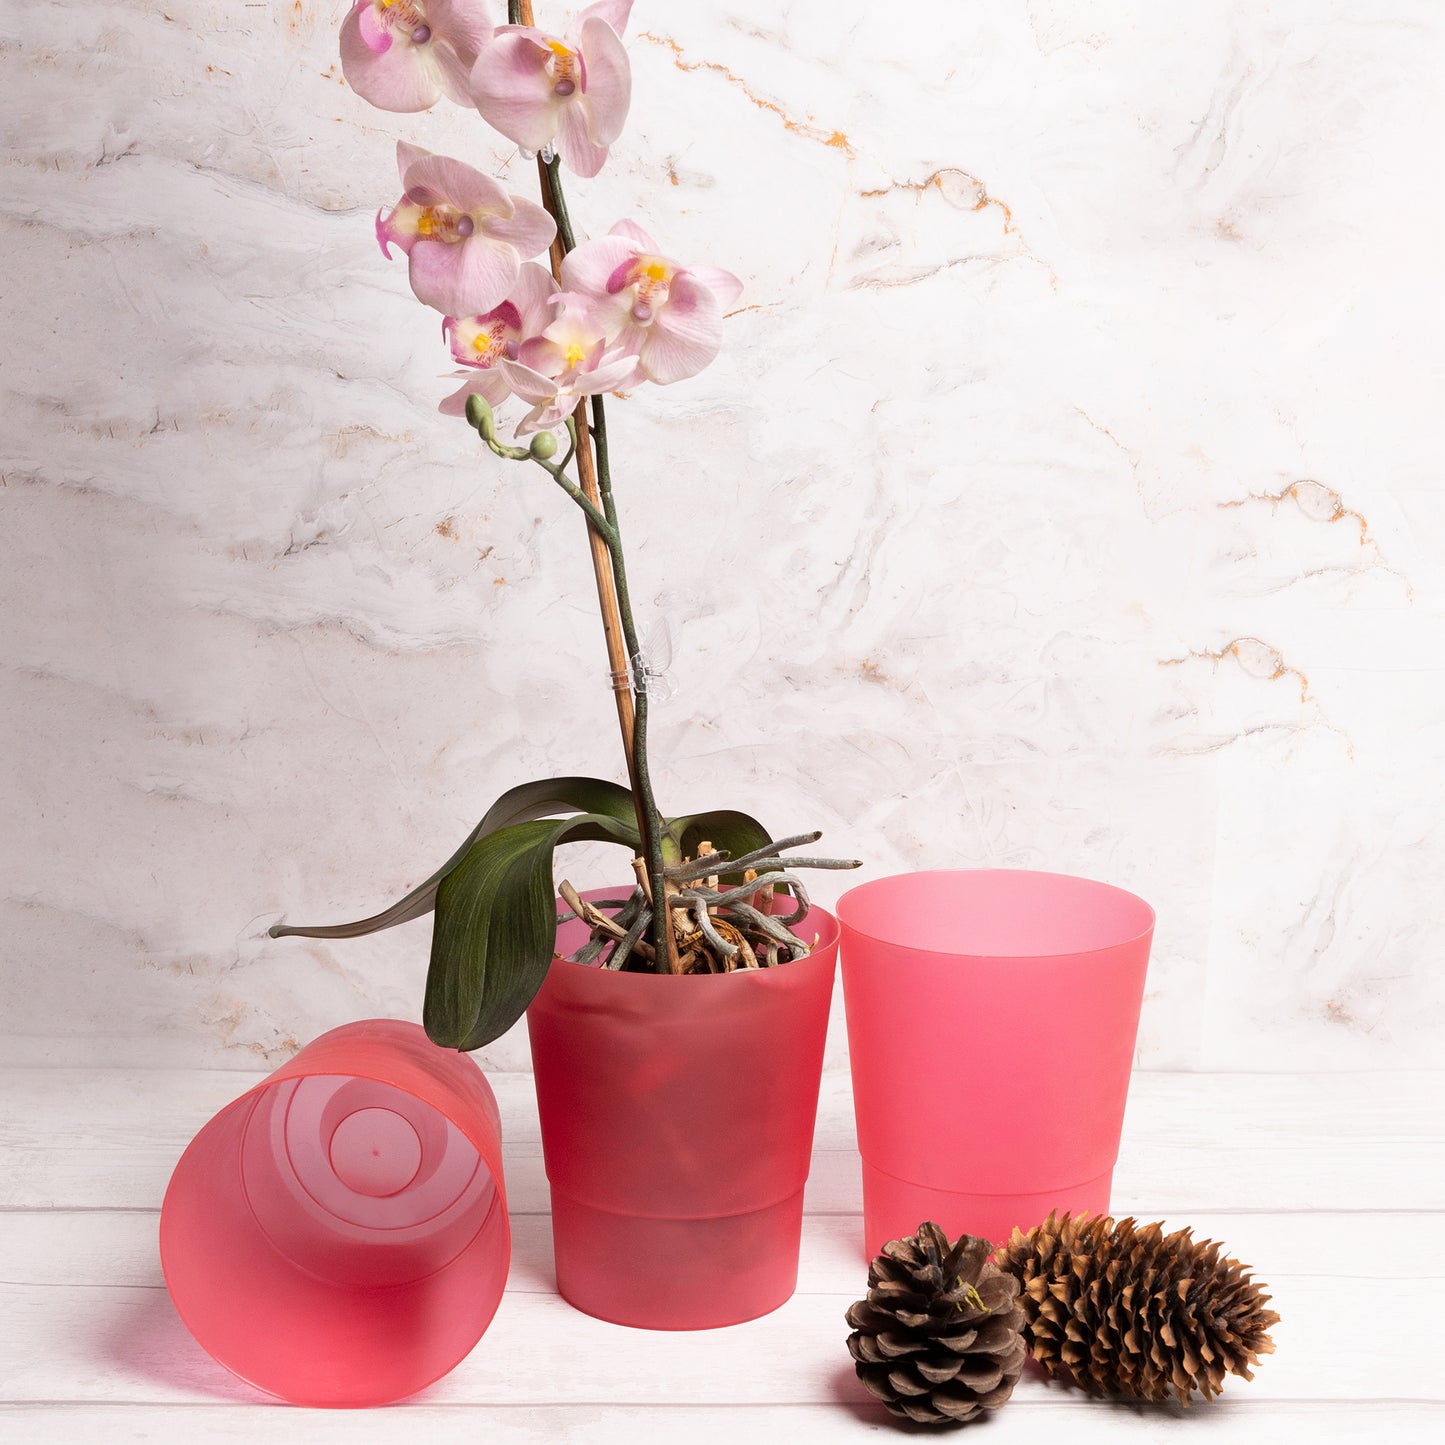 Plant Pots Indoor 12cm Diameter Set of 3 Plastic Plant Pot For Orchids Half Transparent